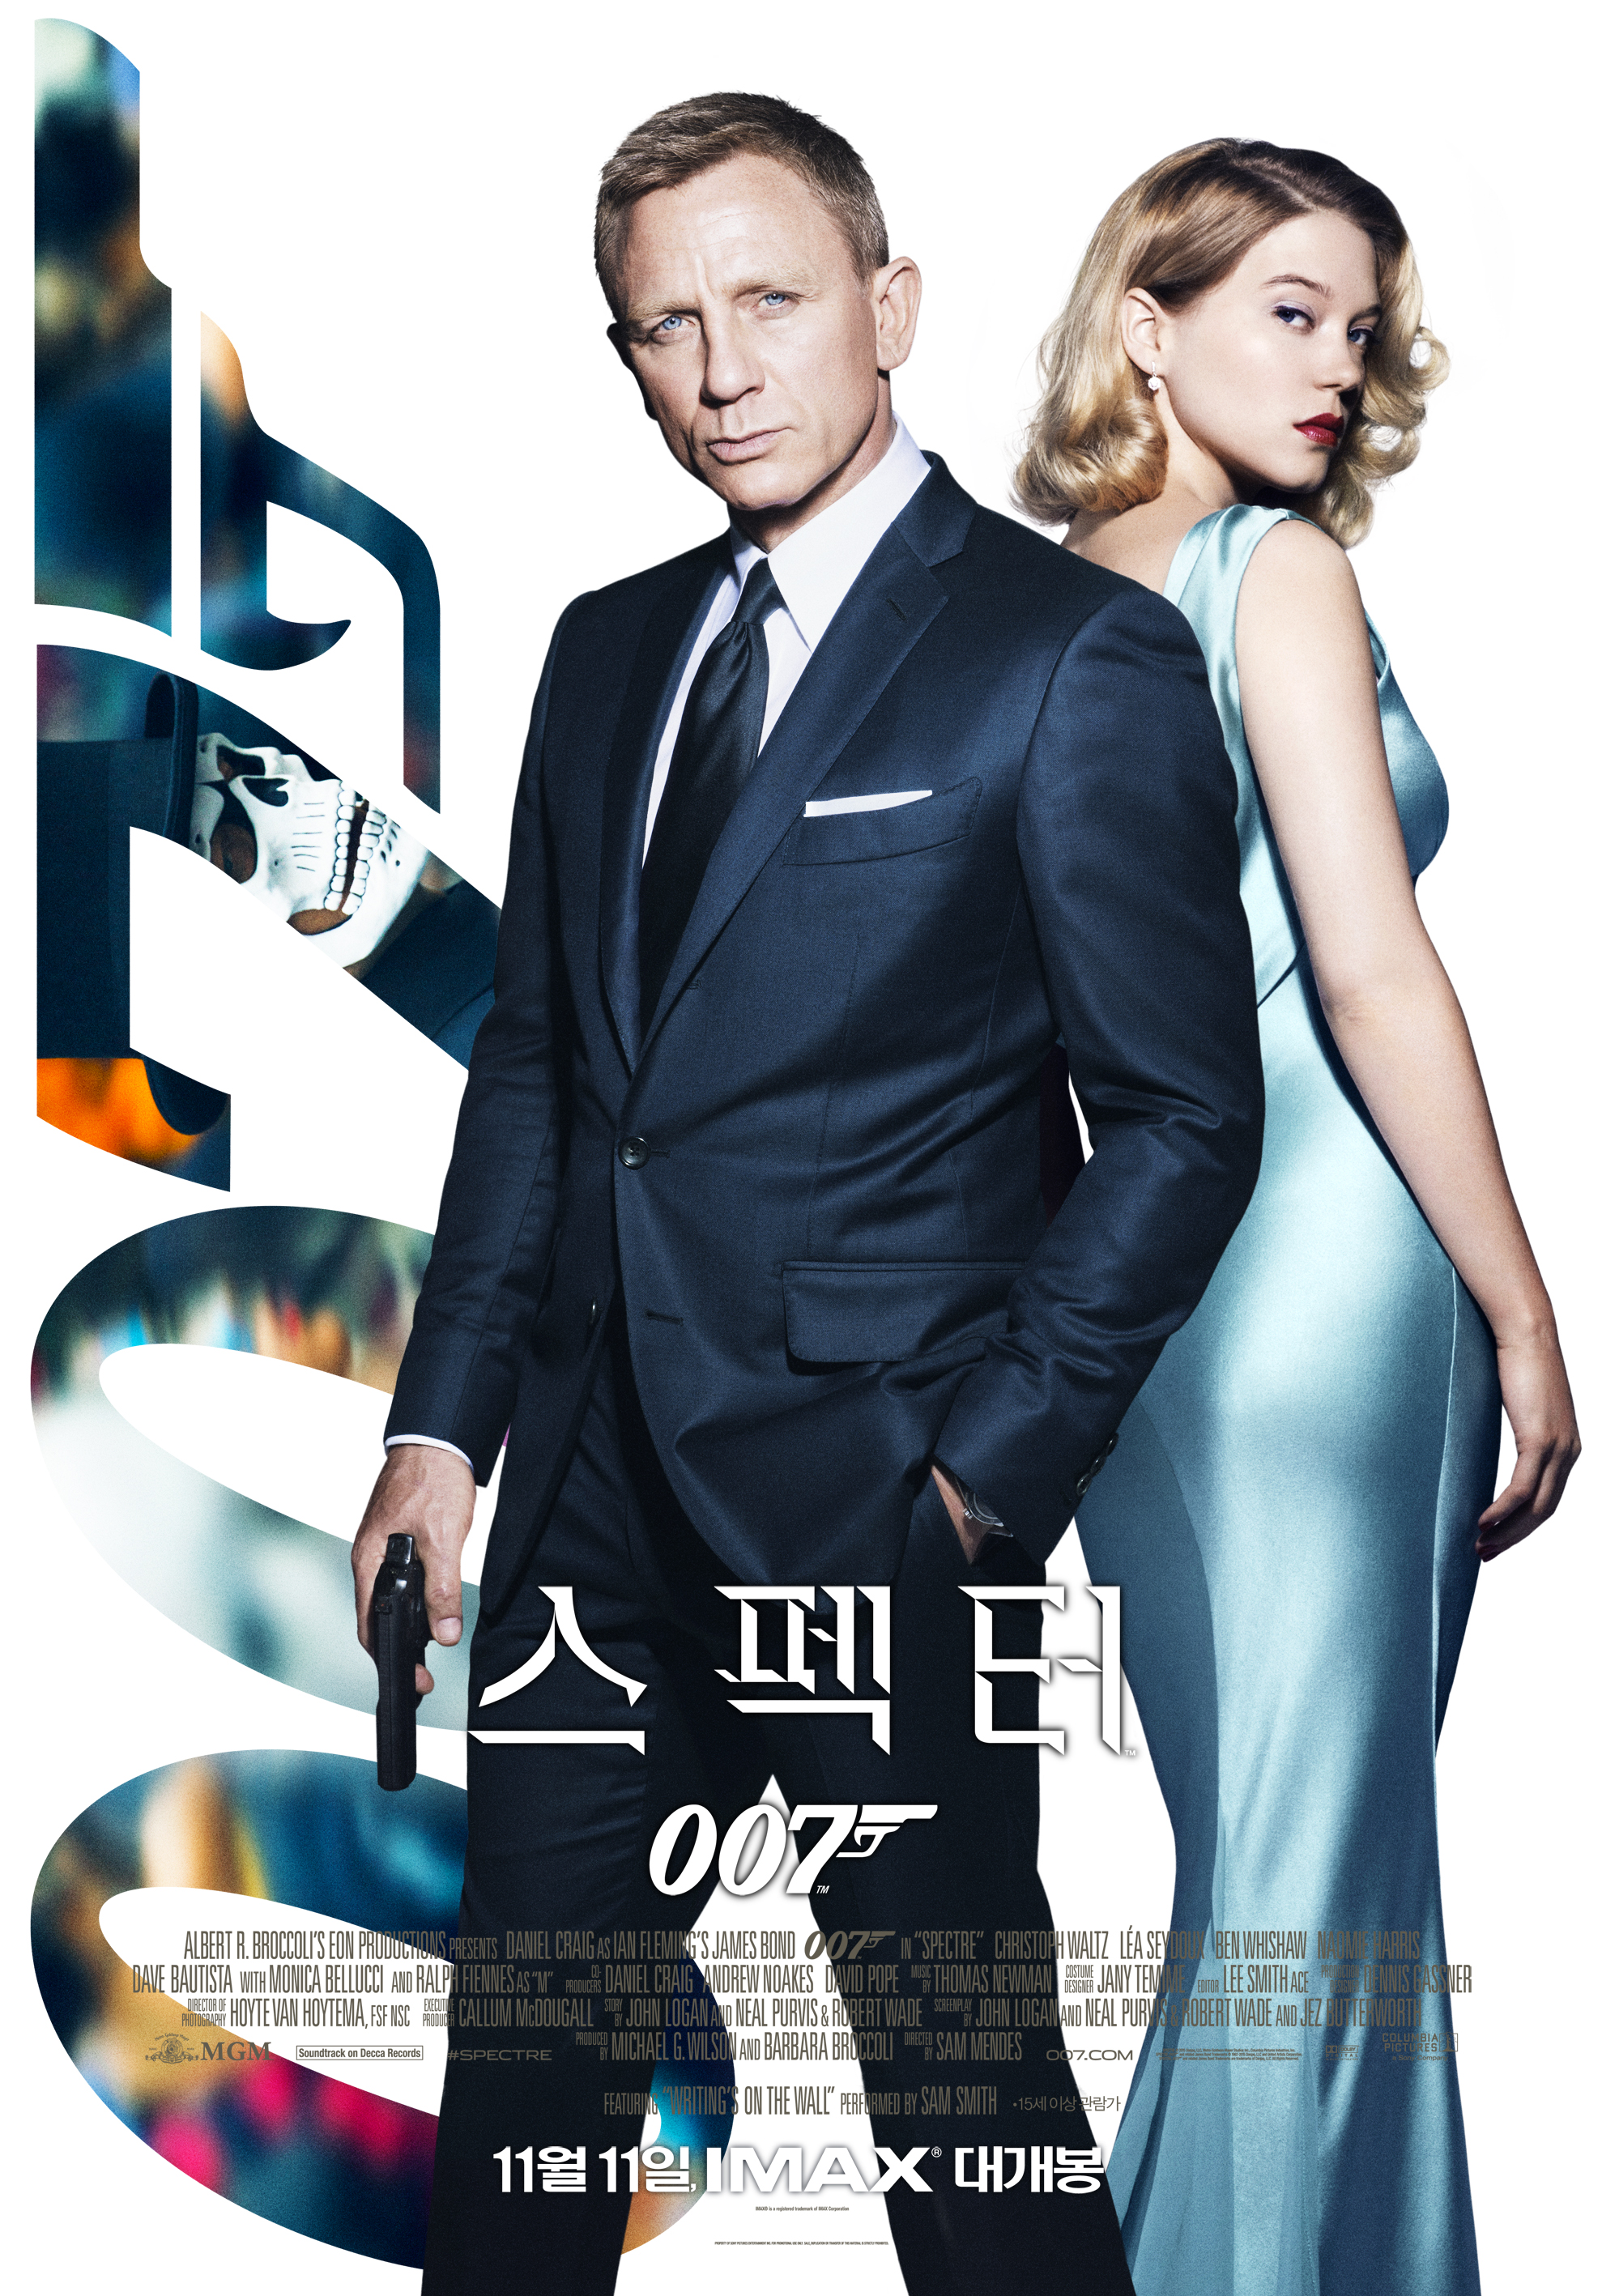 007 spectre movie